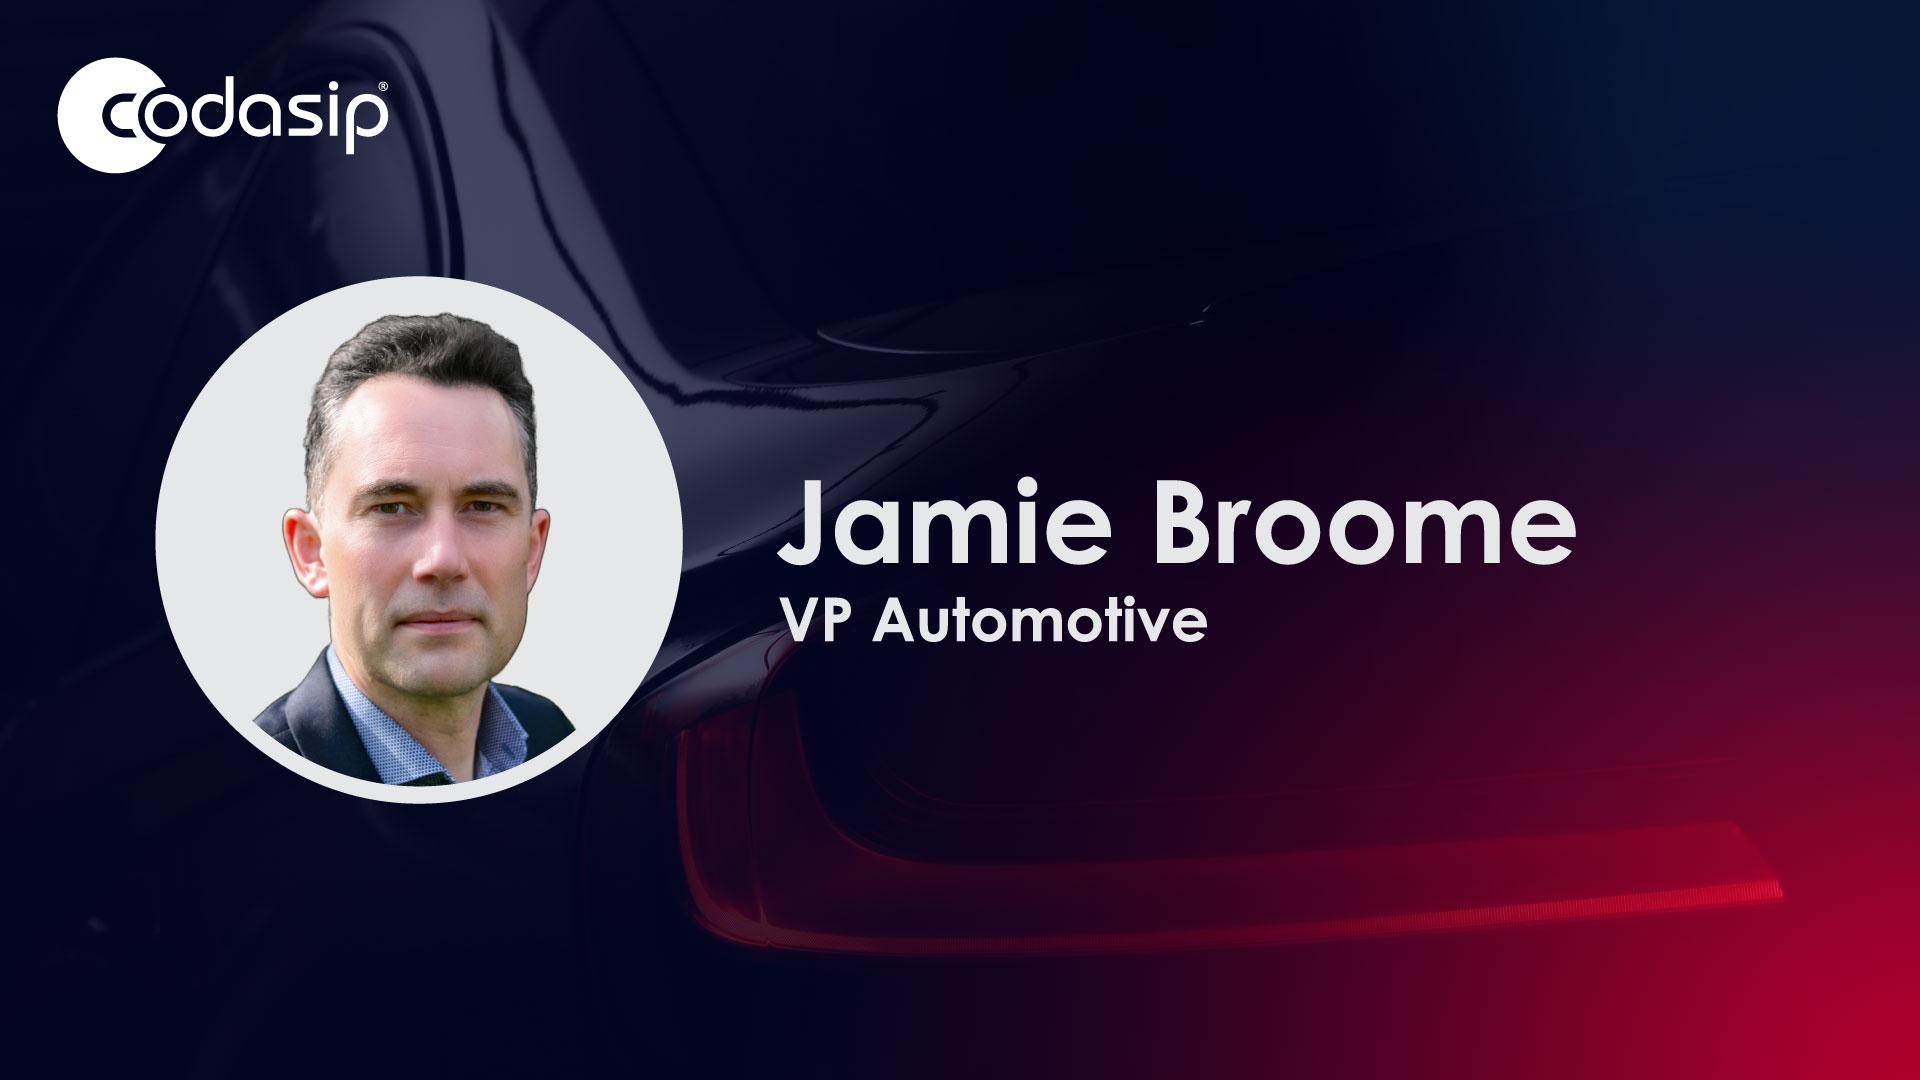 Jamie Broome VP automotive at Codasip